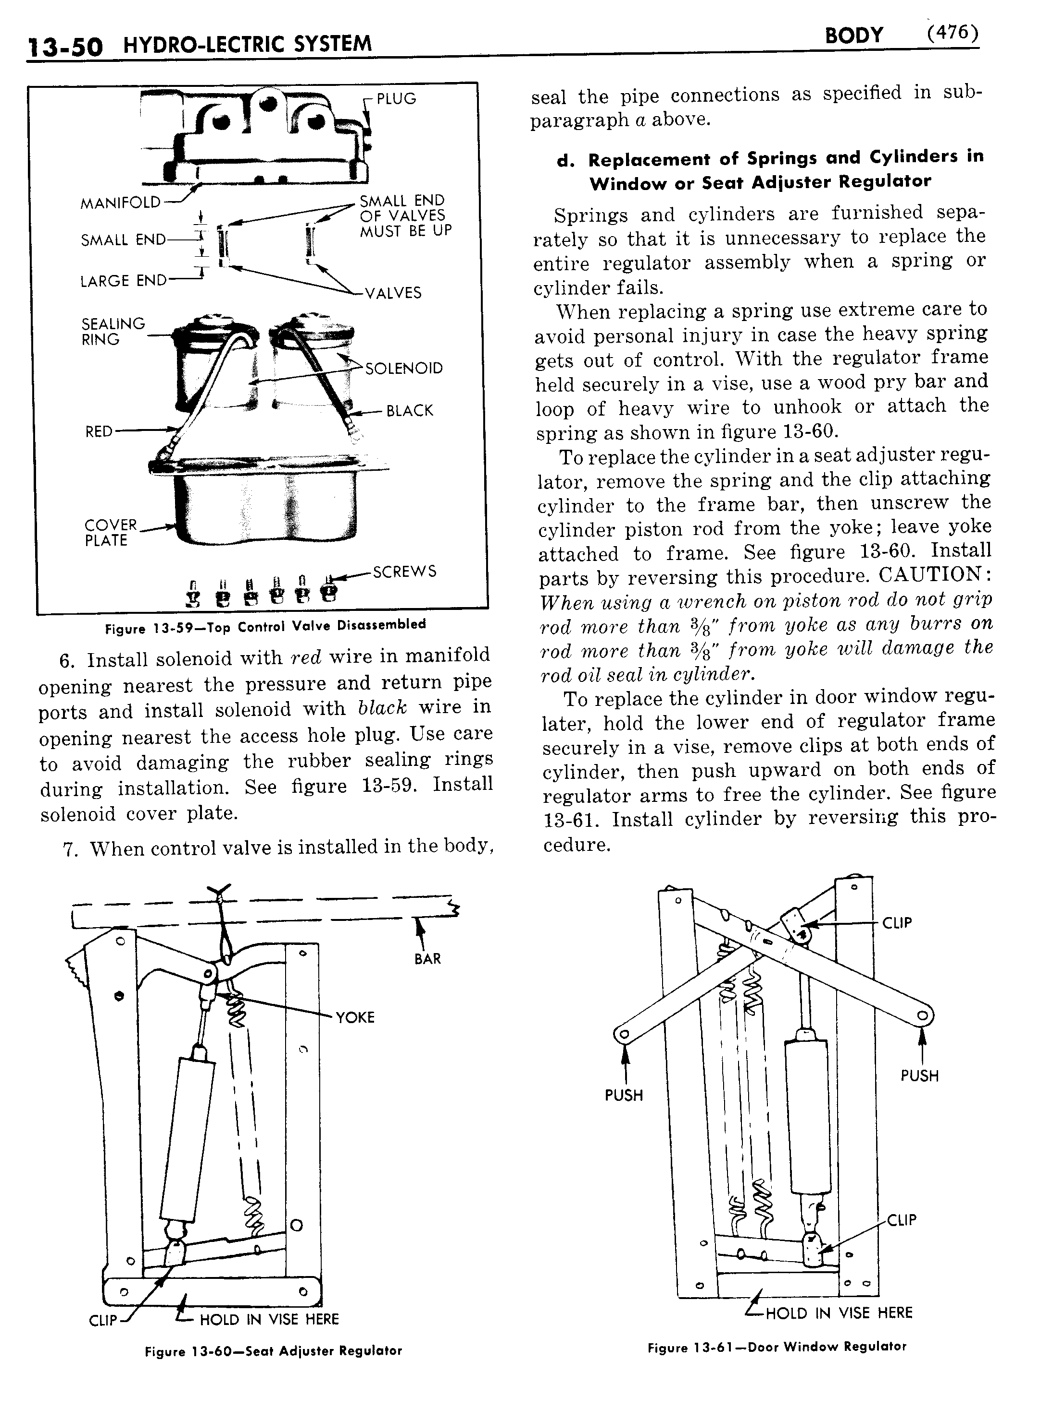 n_14 1951 Buick Shop Manual - Body-050-050.jpg